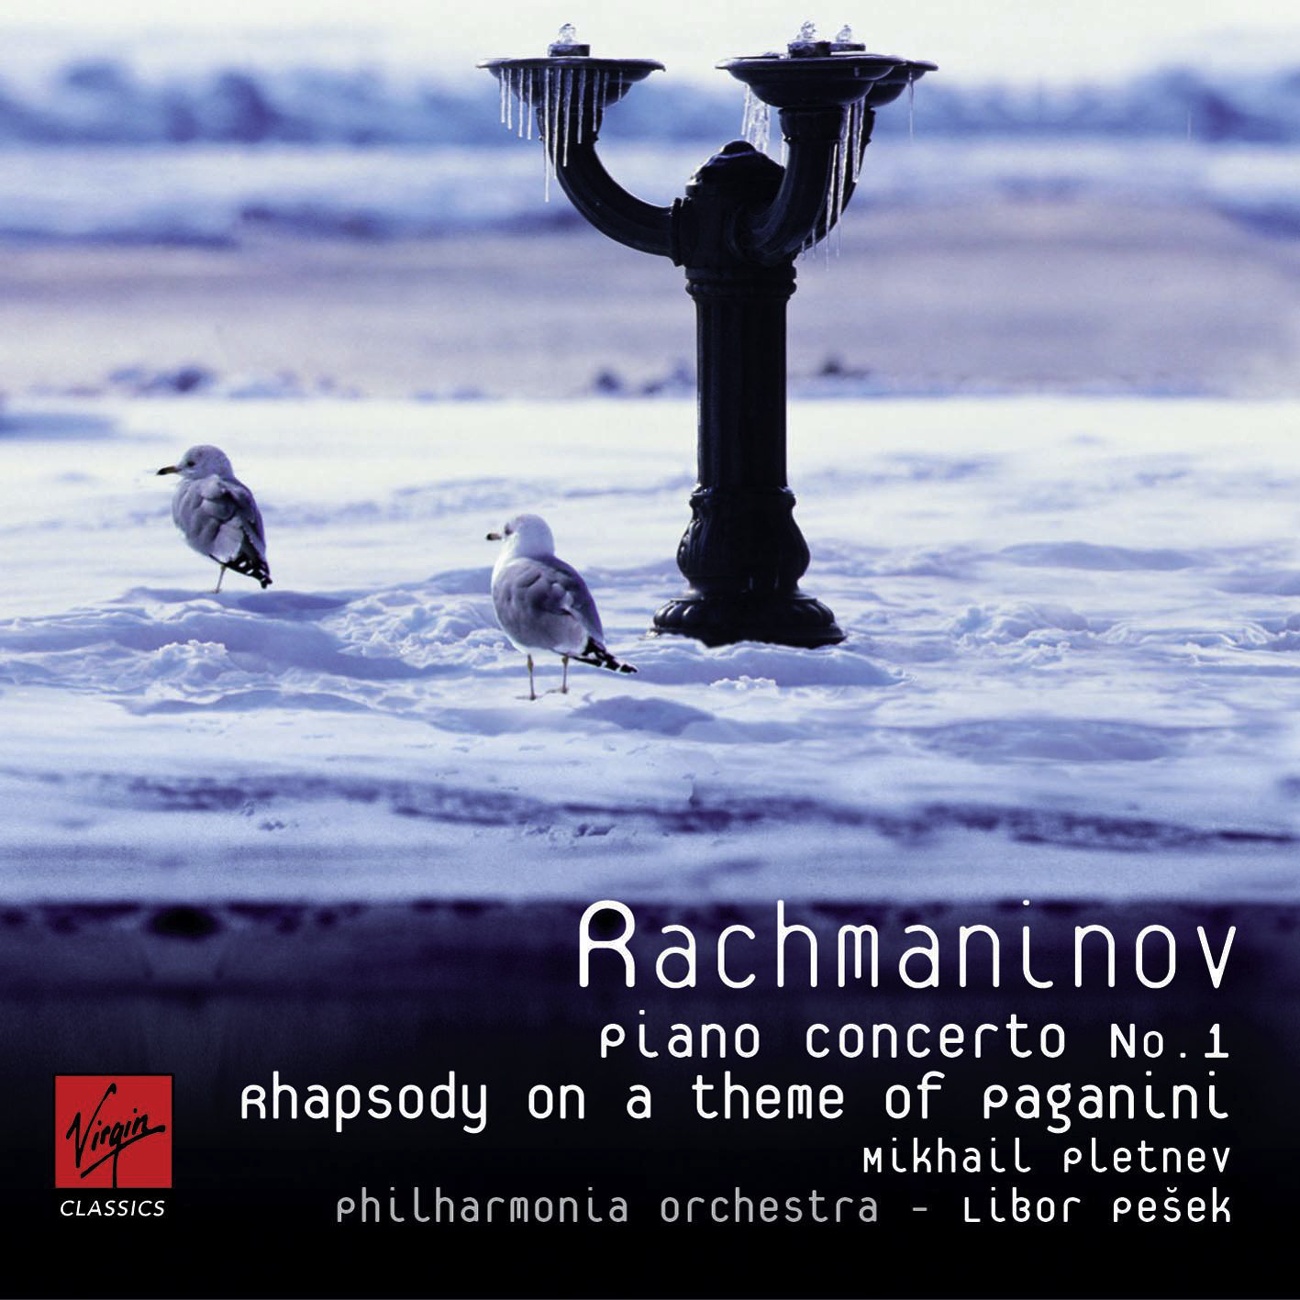 Rhapsody on a Theme of Paganini: Variation XX  Un poco piu vivo